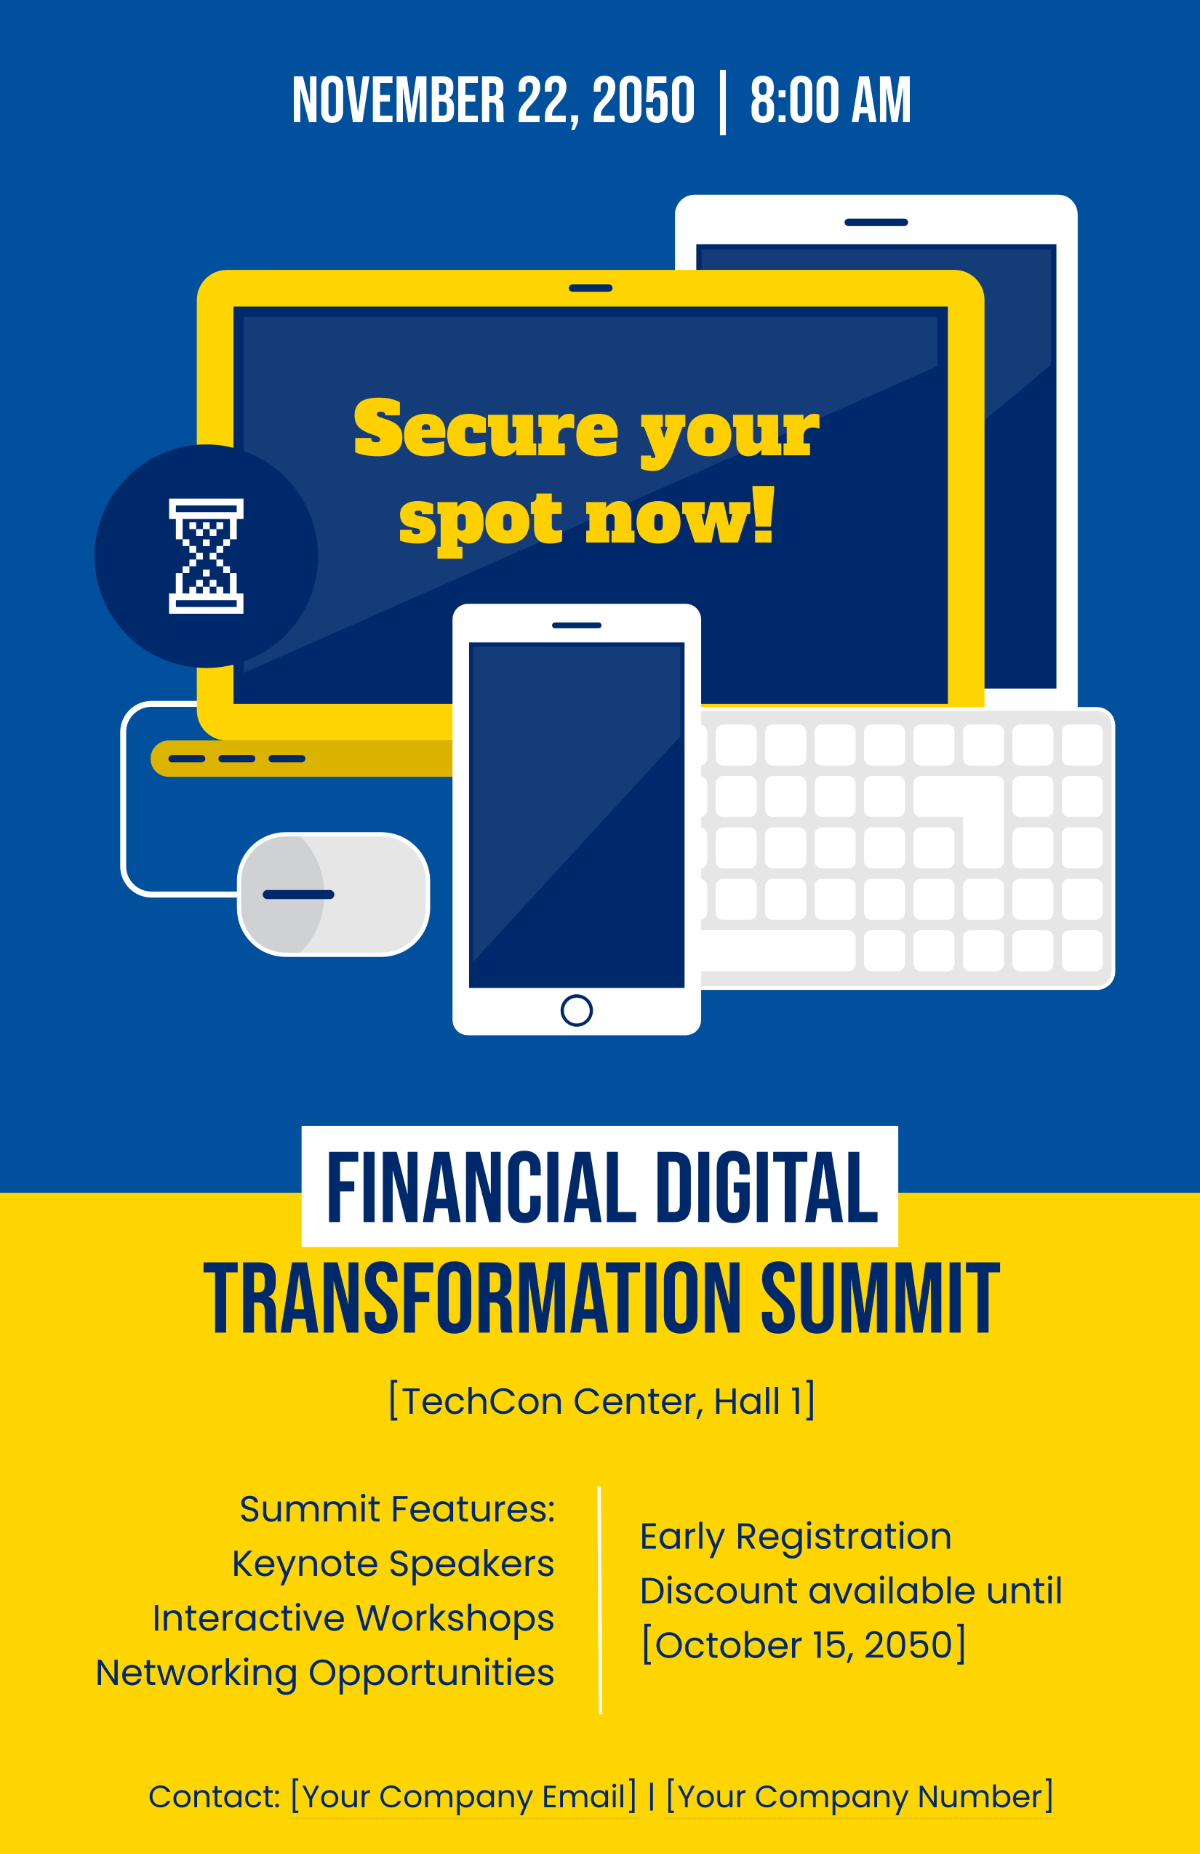 Financial Digital Transformation Summit Poster Template